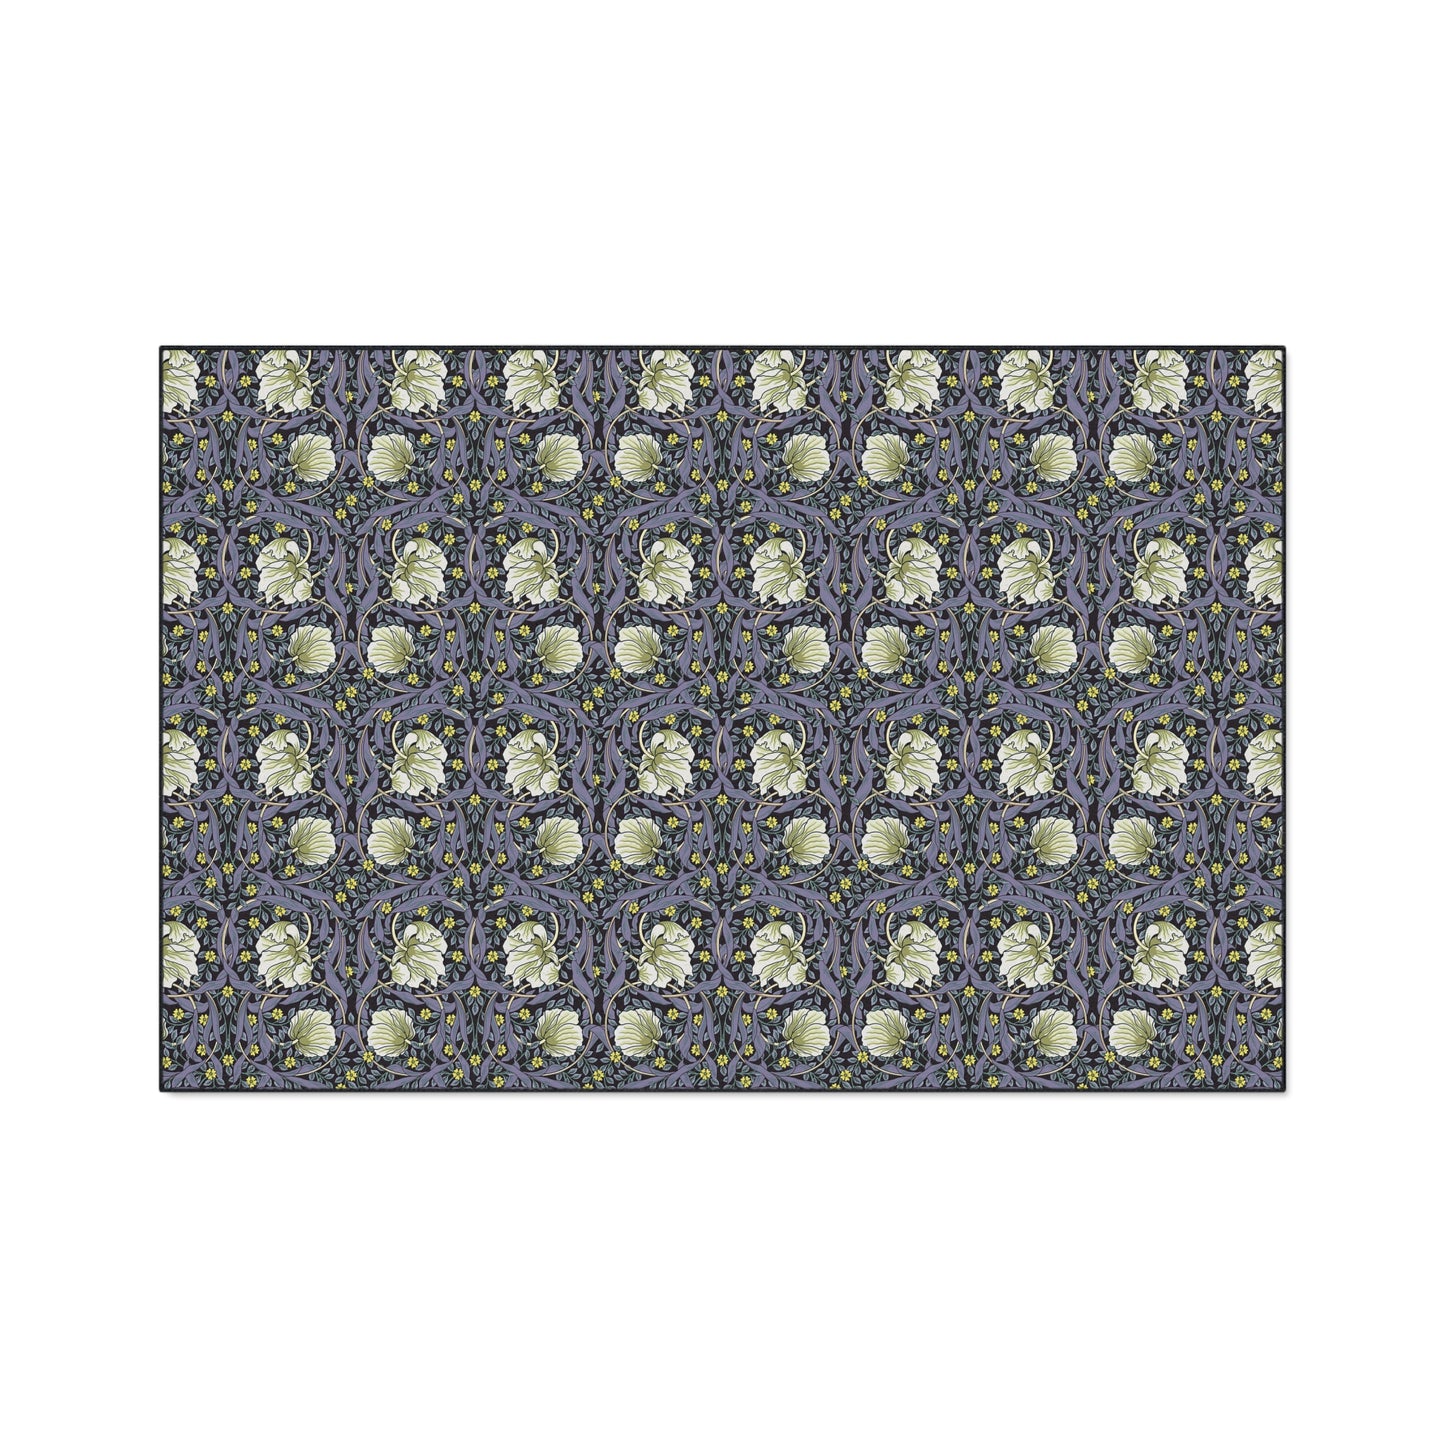 william-morris-co-heavy-duty-floor-mat-floor-mat-pimpernel-collection-lavender-1